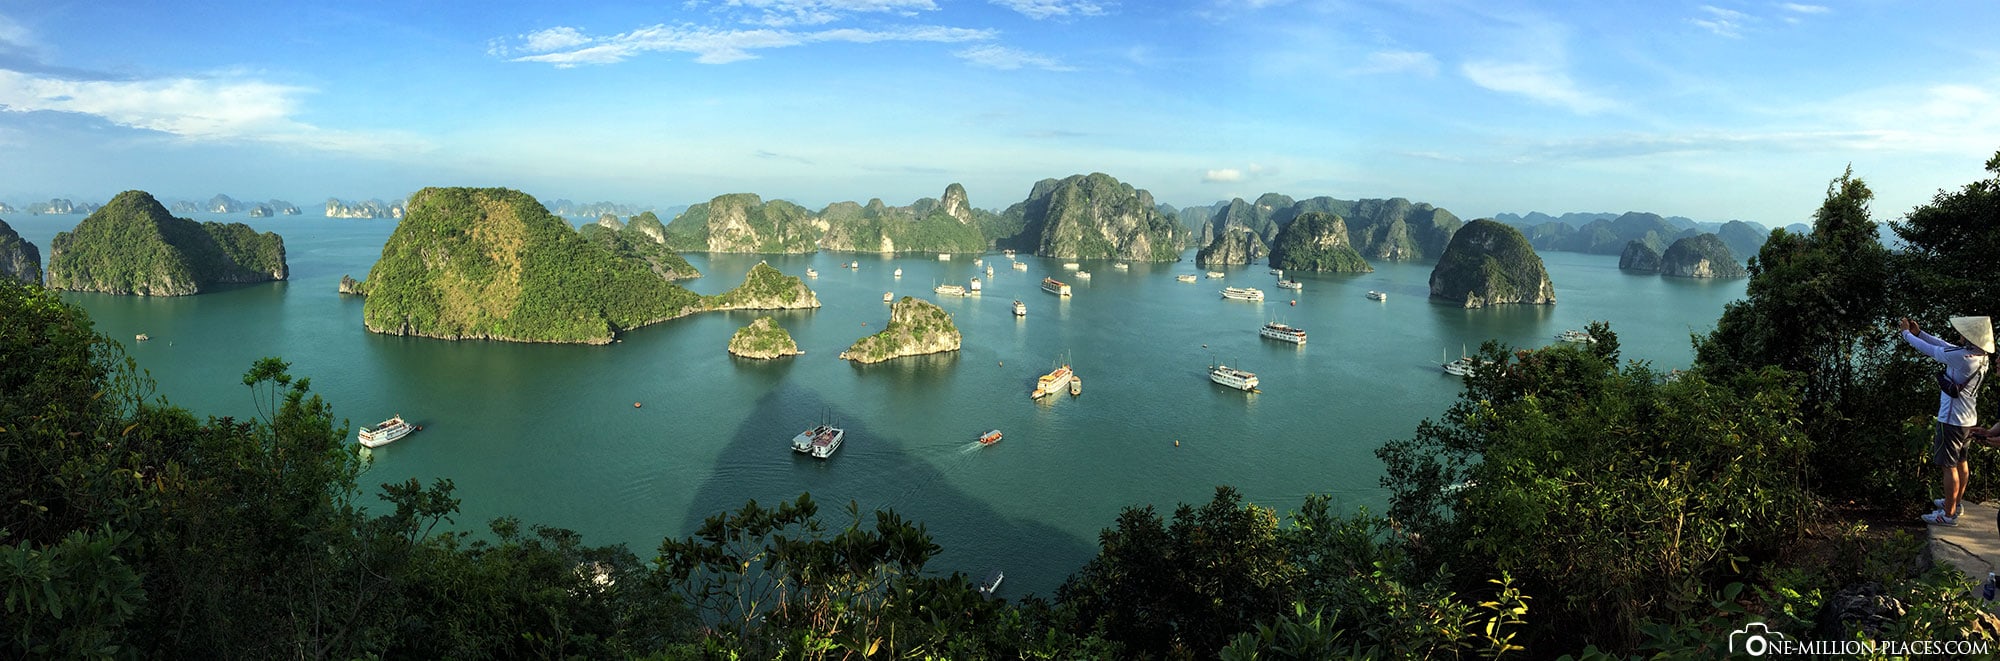 Panoramabild, Halong Bay, Vietnam, 2 Tages-Bootstour, Kreuzfahrt, Schiff, Reisebericht